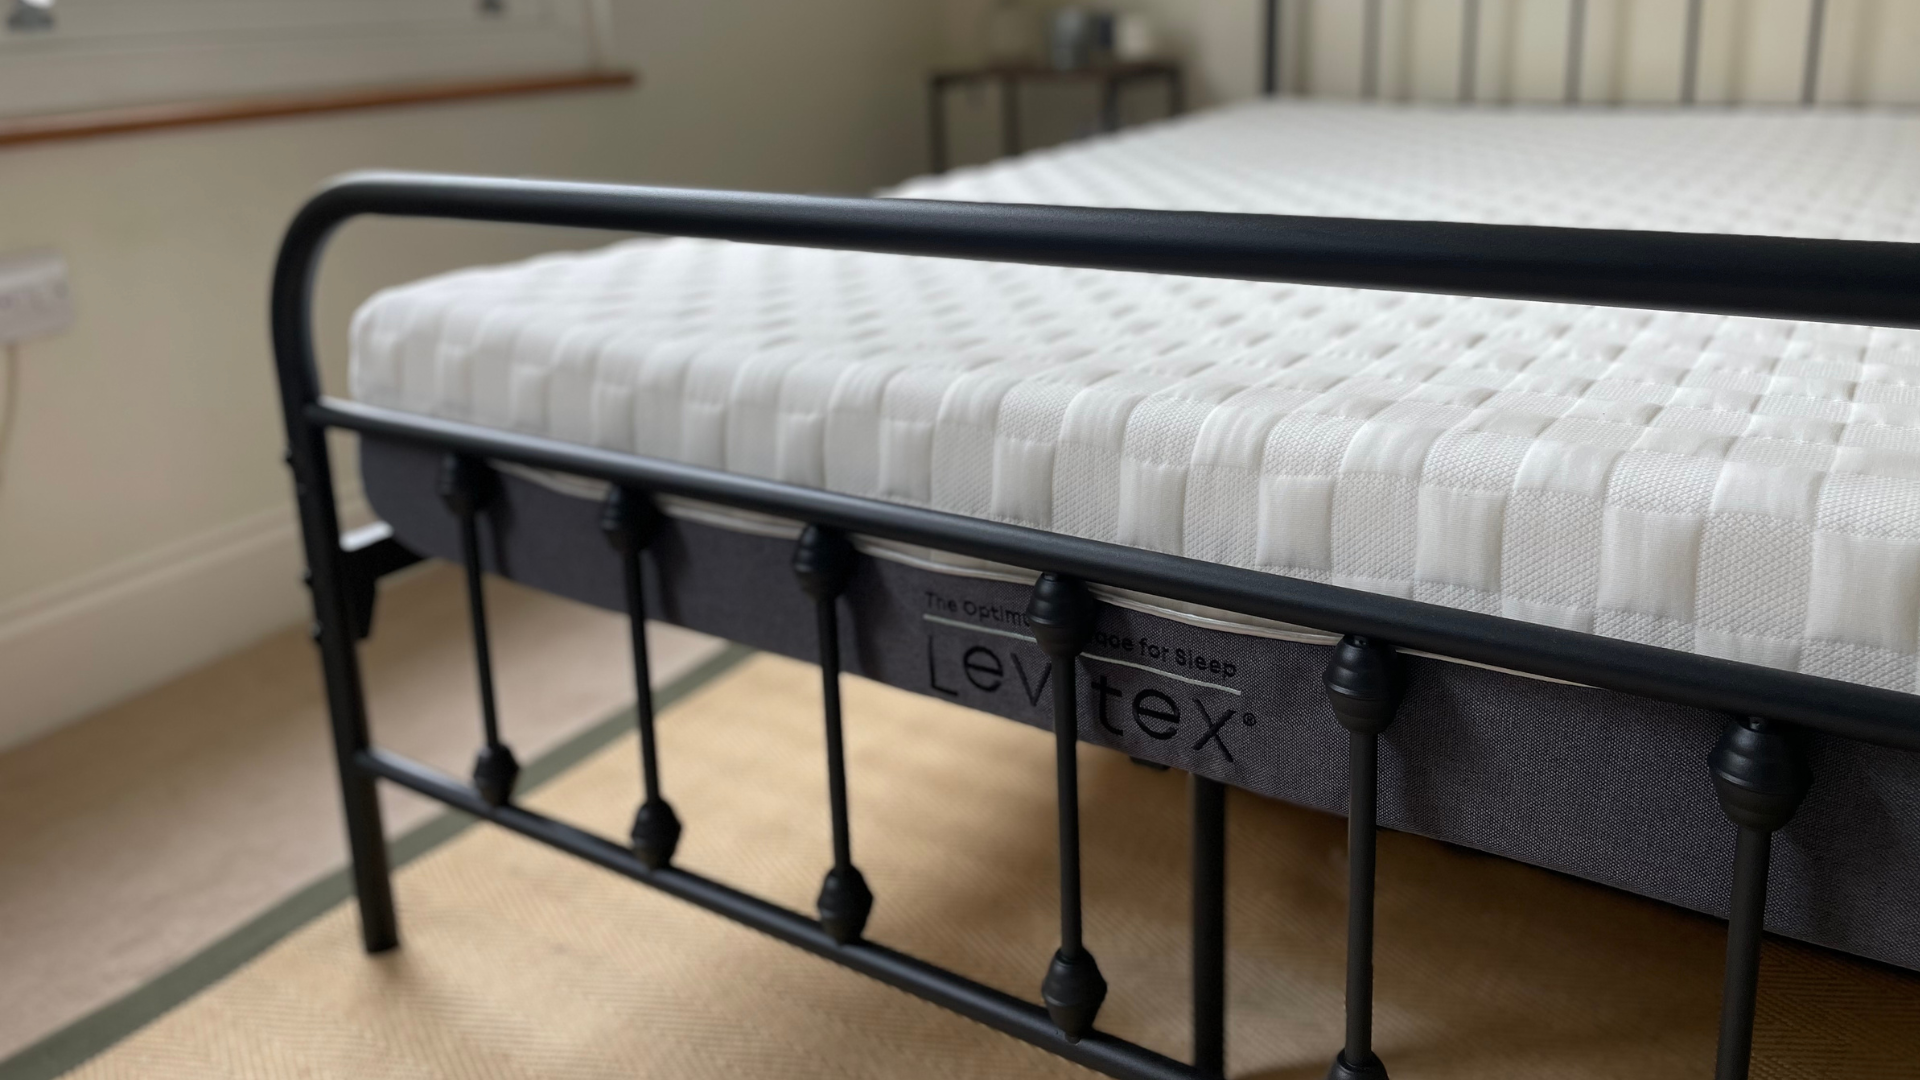 r reviews Levitex Pillow - Sleep Posture Experts